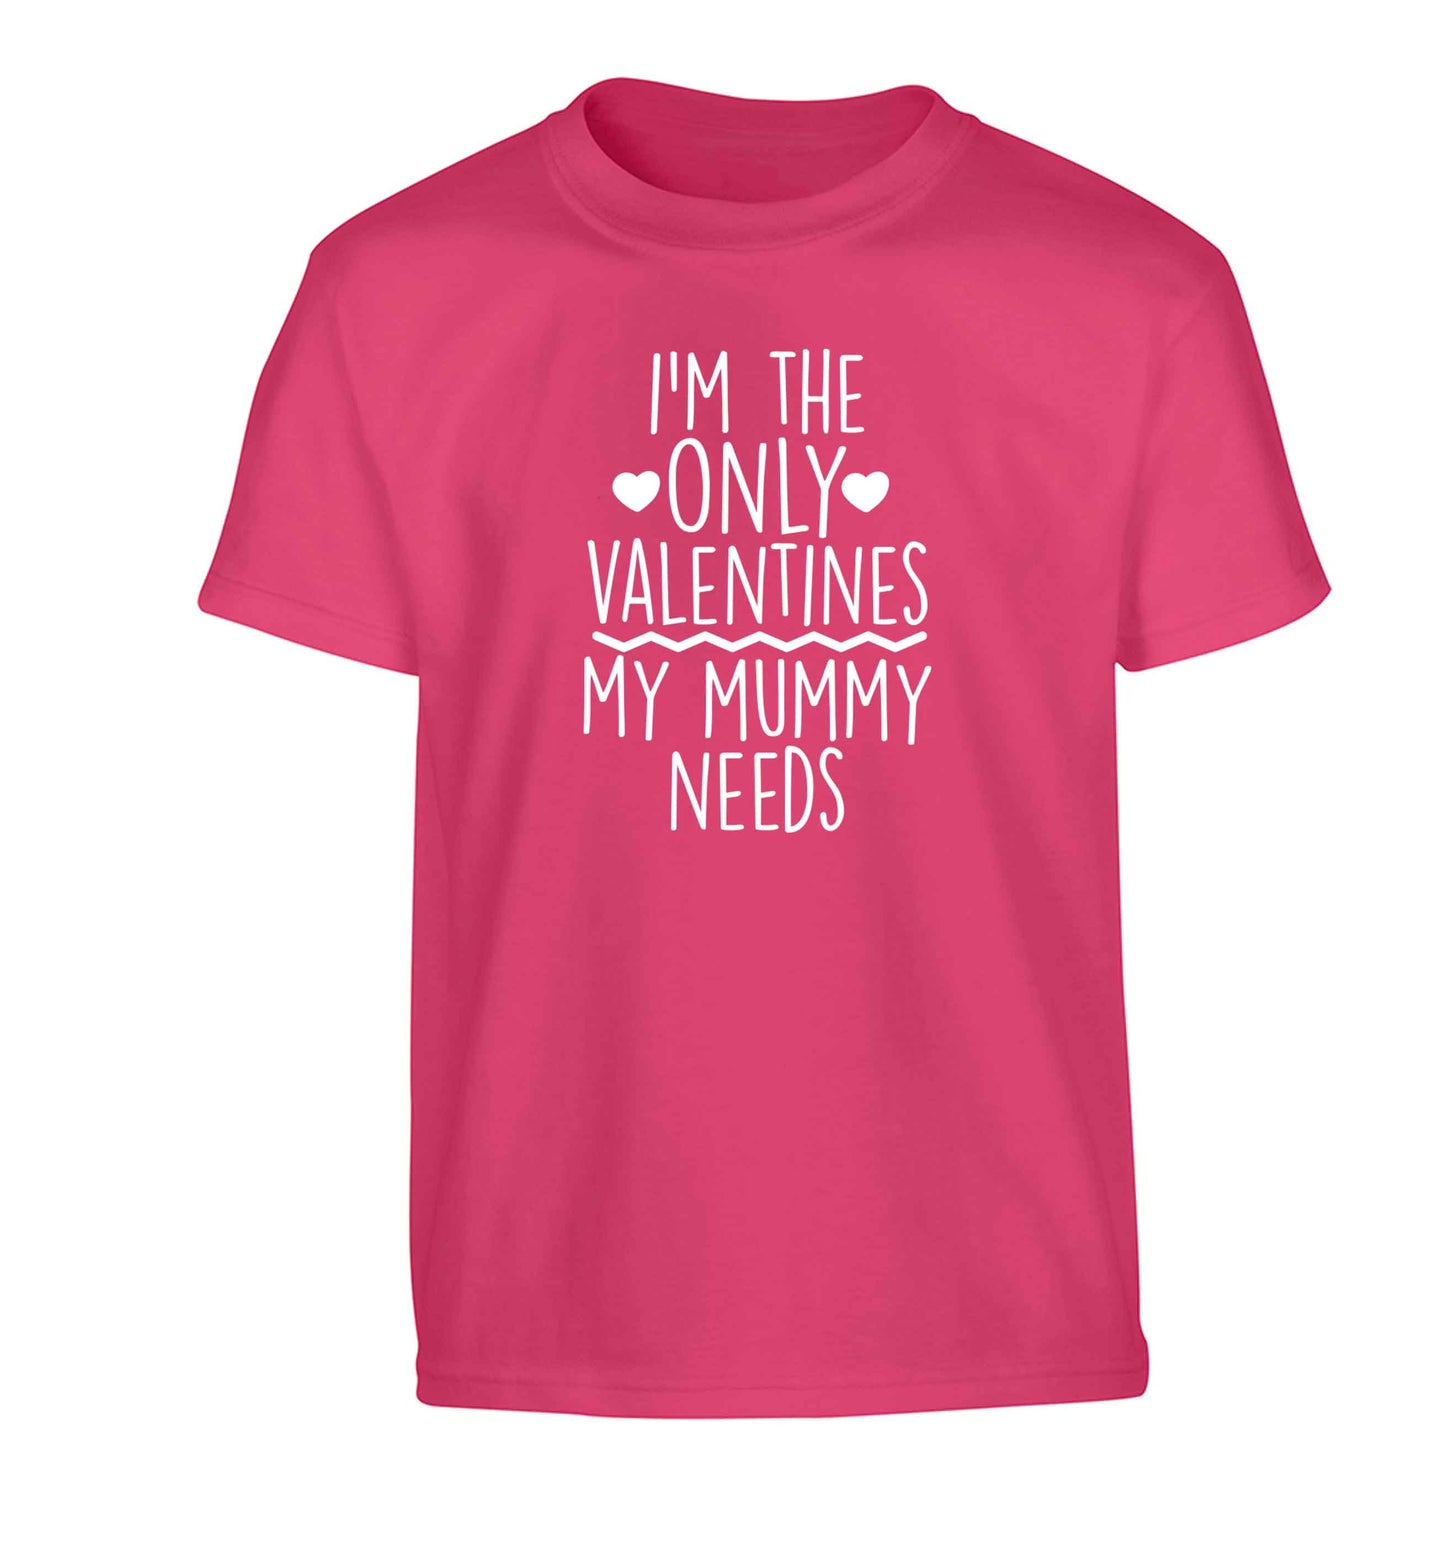 I'm the only valentines my mummy needs Children's pink Tshirt 12-13 Years